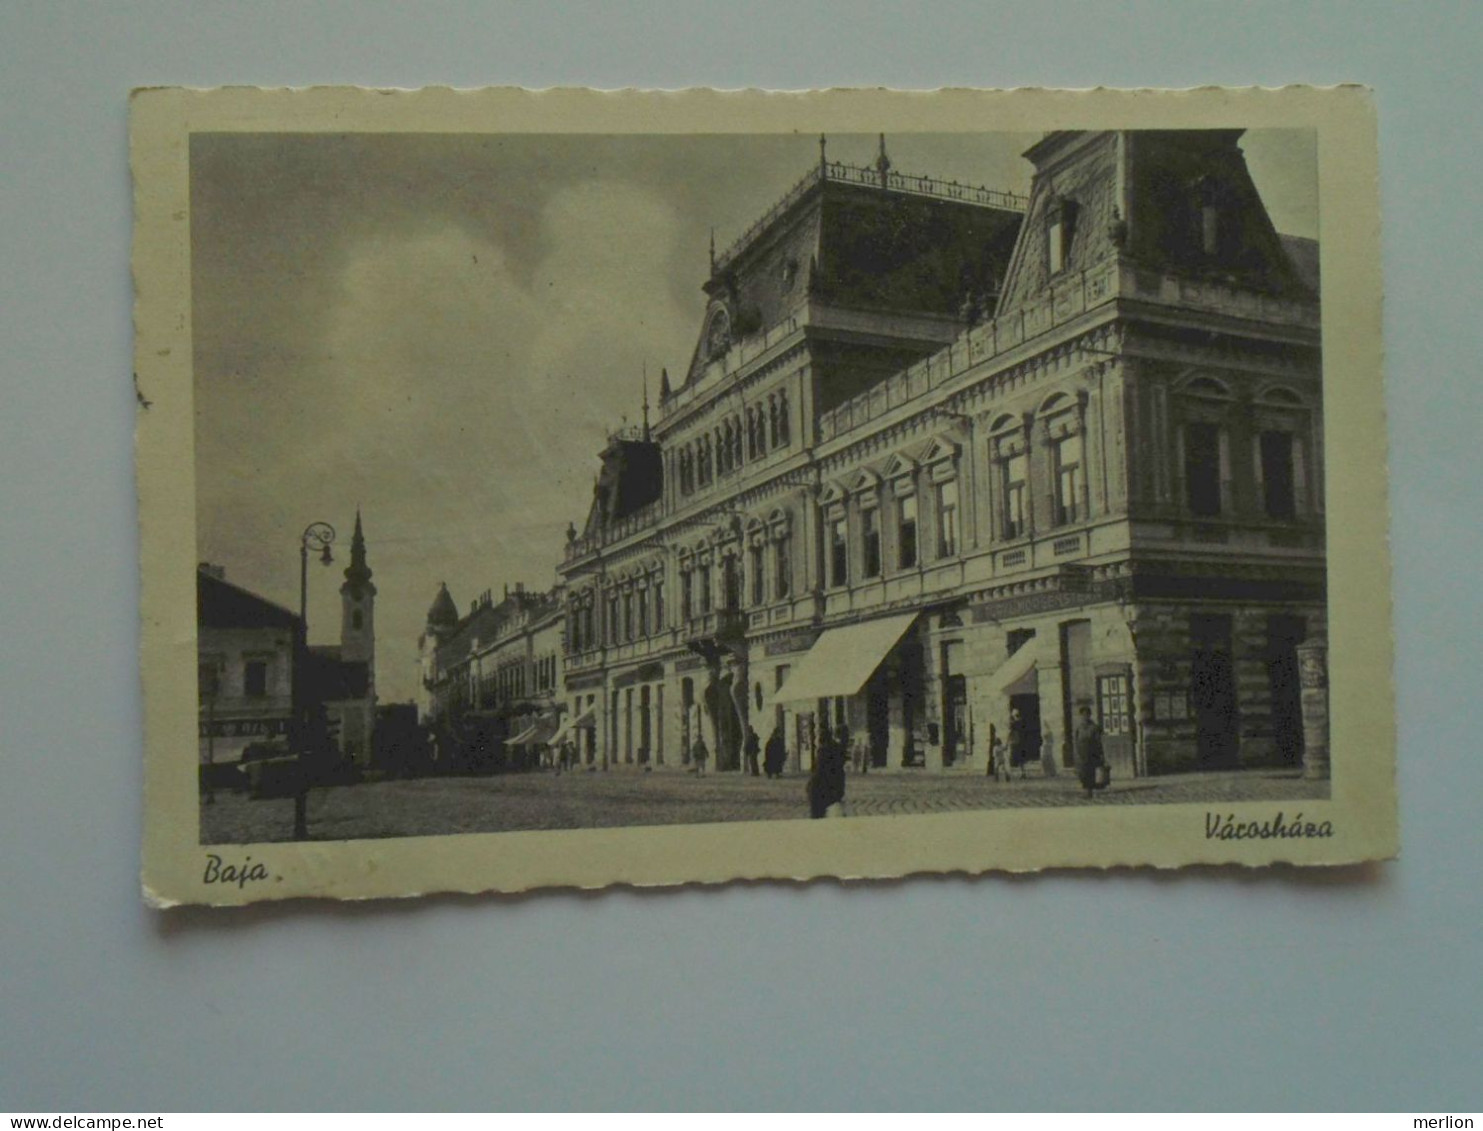 D200846  Hungary  Postage Due -  1942    Porto Stamp  4 Filler   BAJA - Segnatasse